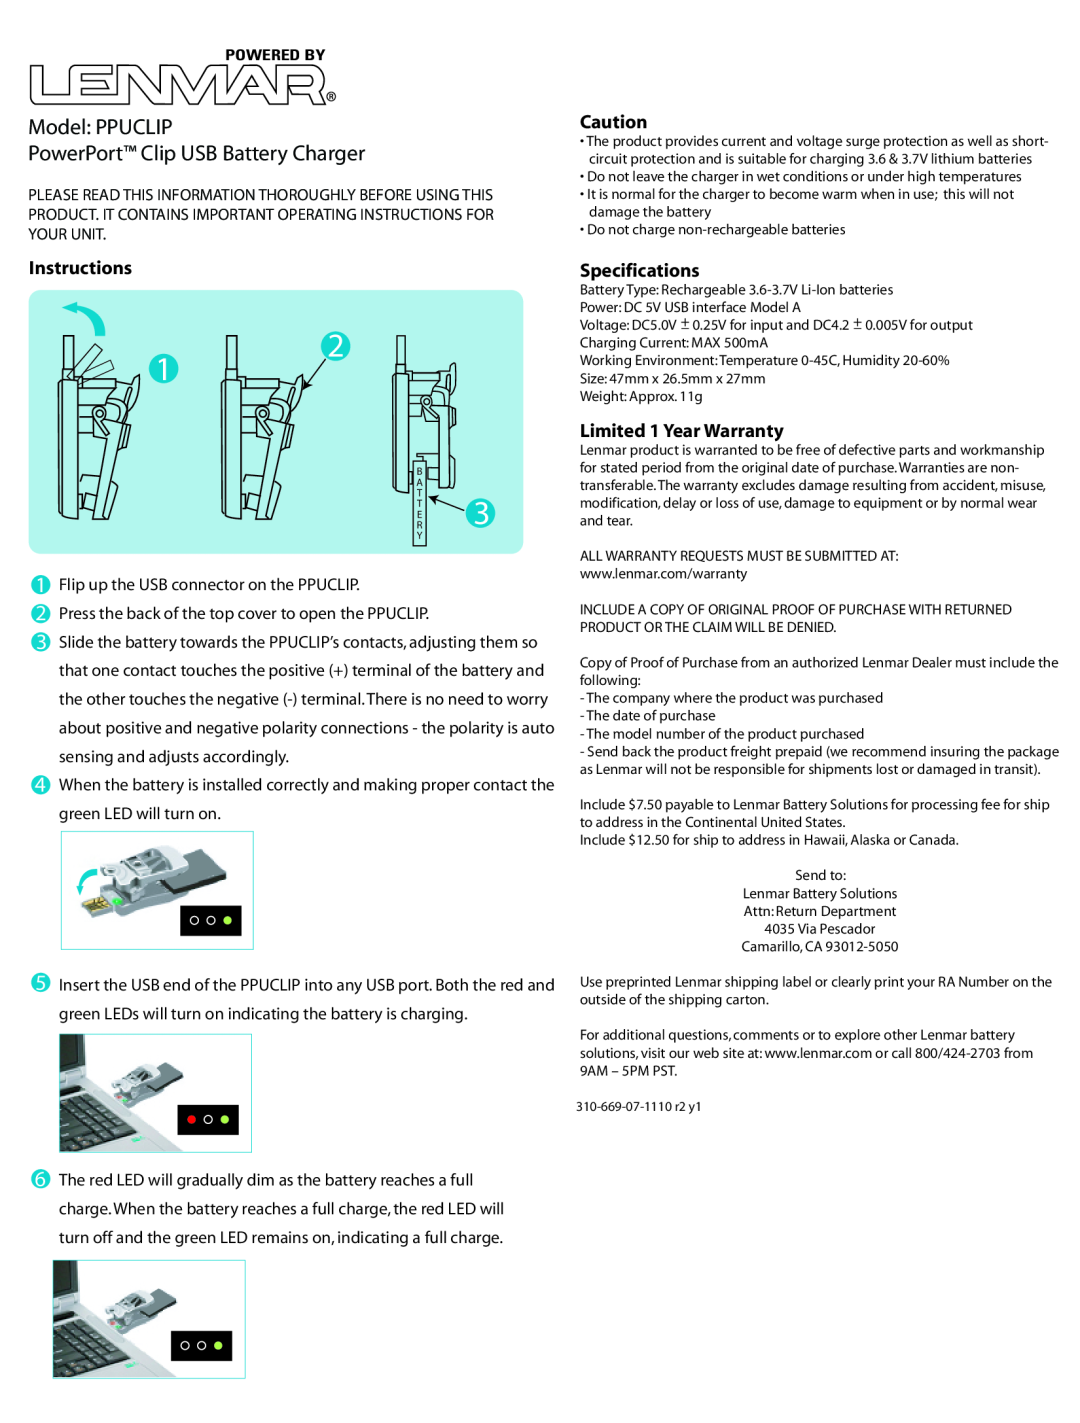 Lenmar Enterprises specifications Model PPUCLIP PowerPort Clip USB Battery Charger, Instructions, Specifications 